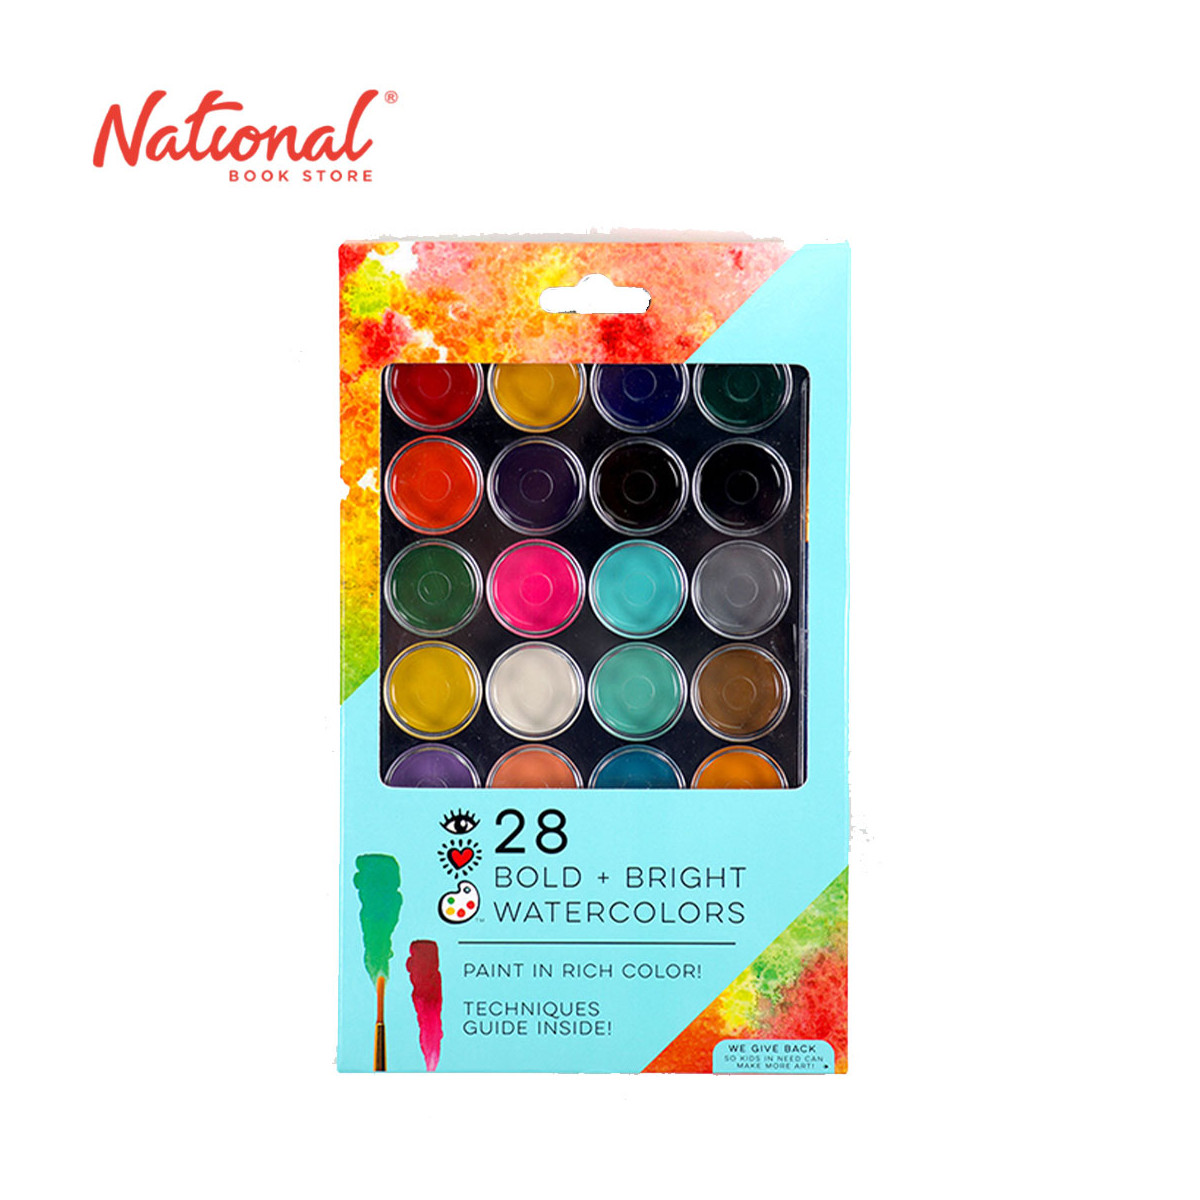 iHeartArt Semi-moist Watercolor Pan 28 Bold + Bright Colors 2228S - Arts & Crafts Supplies